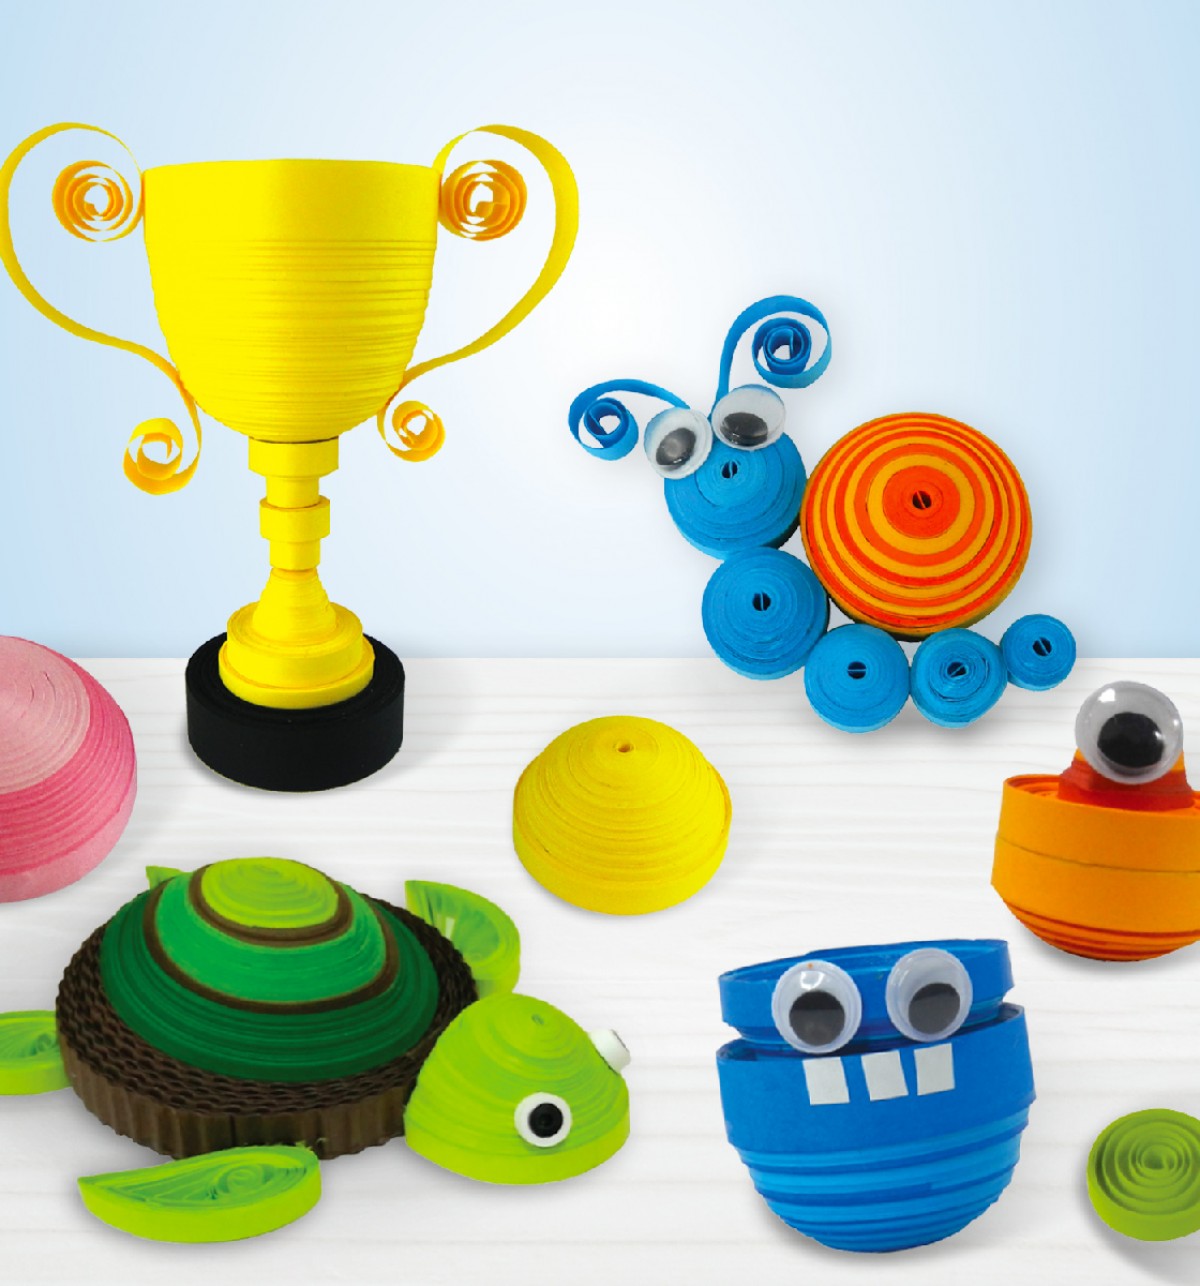 Imagimake Super Quiller Spyrosity, Spyrosity 3D Crinklers Explore Quilling Based Creative Toy and Activity Set, Kids for 3Y+, Multicolour